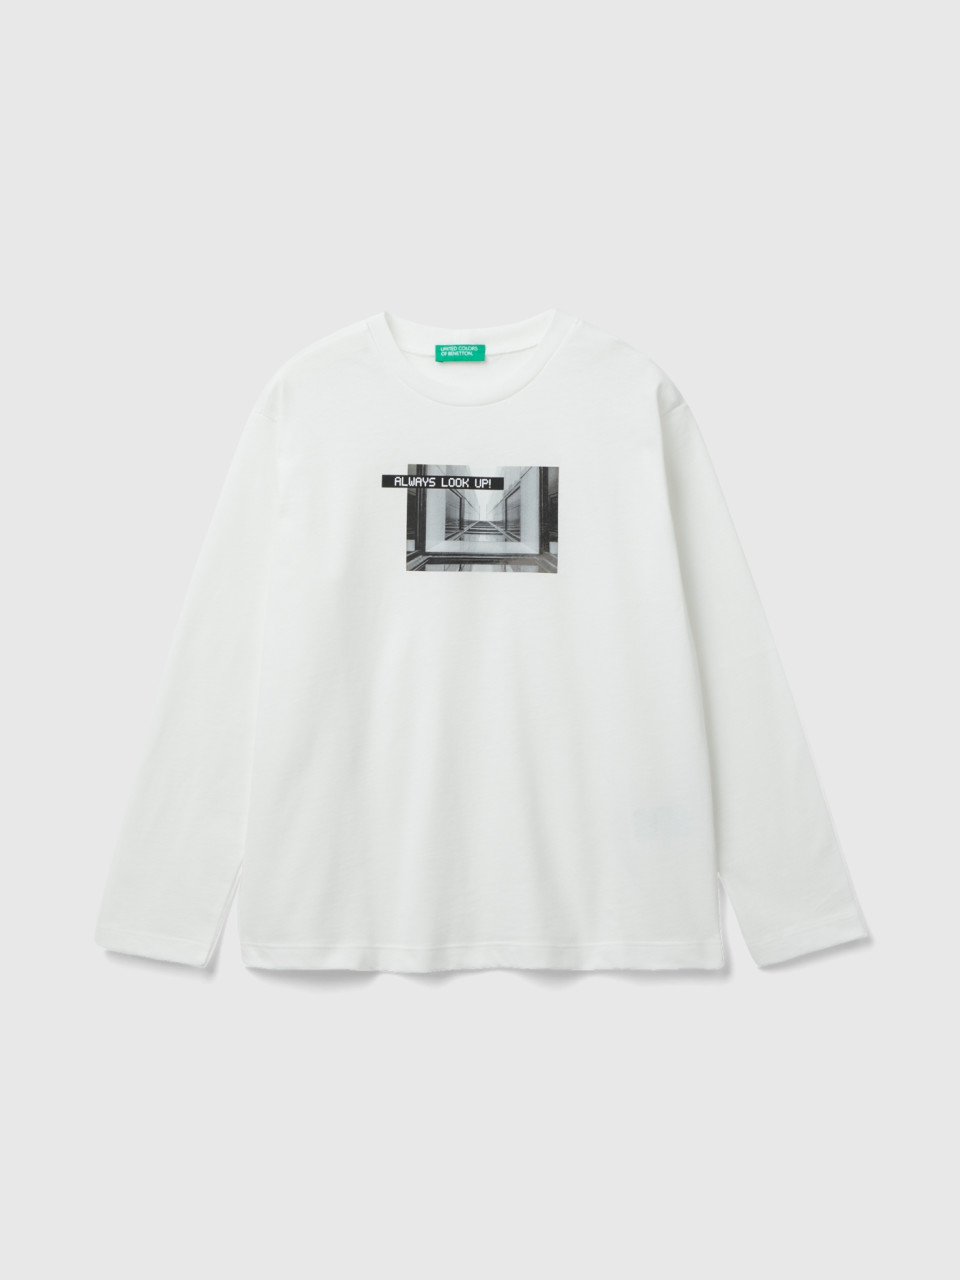 Benetton, Warmes T-shirt Mit Fotoprint, Weiss, male